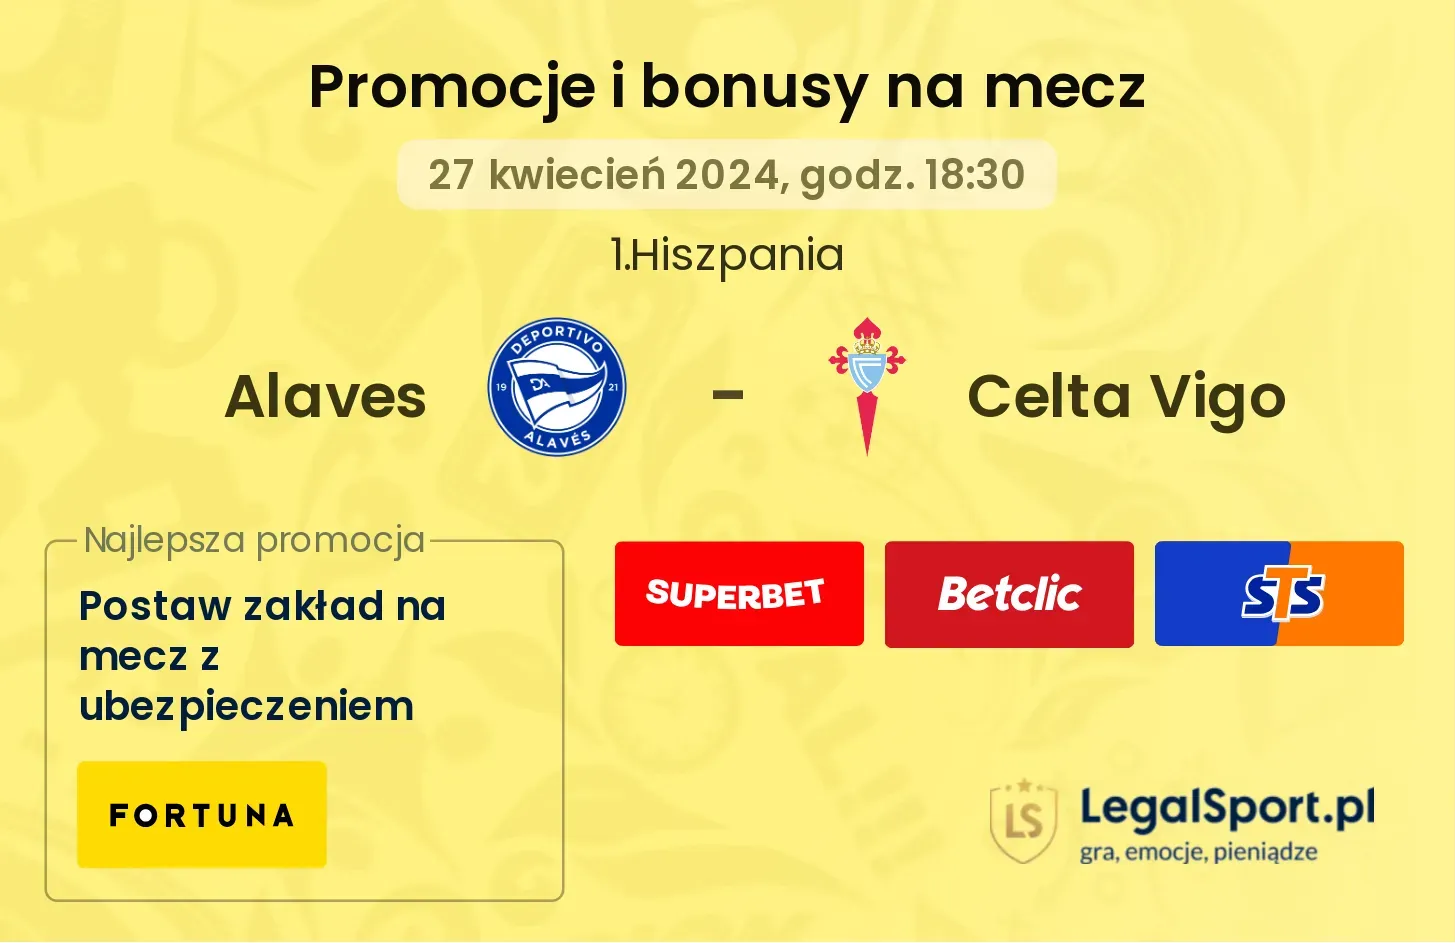 Alaves - Celta Vigo promocje bonusy na mecz